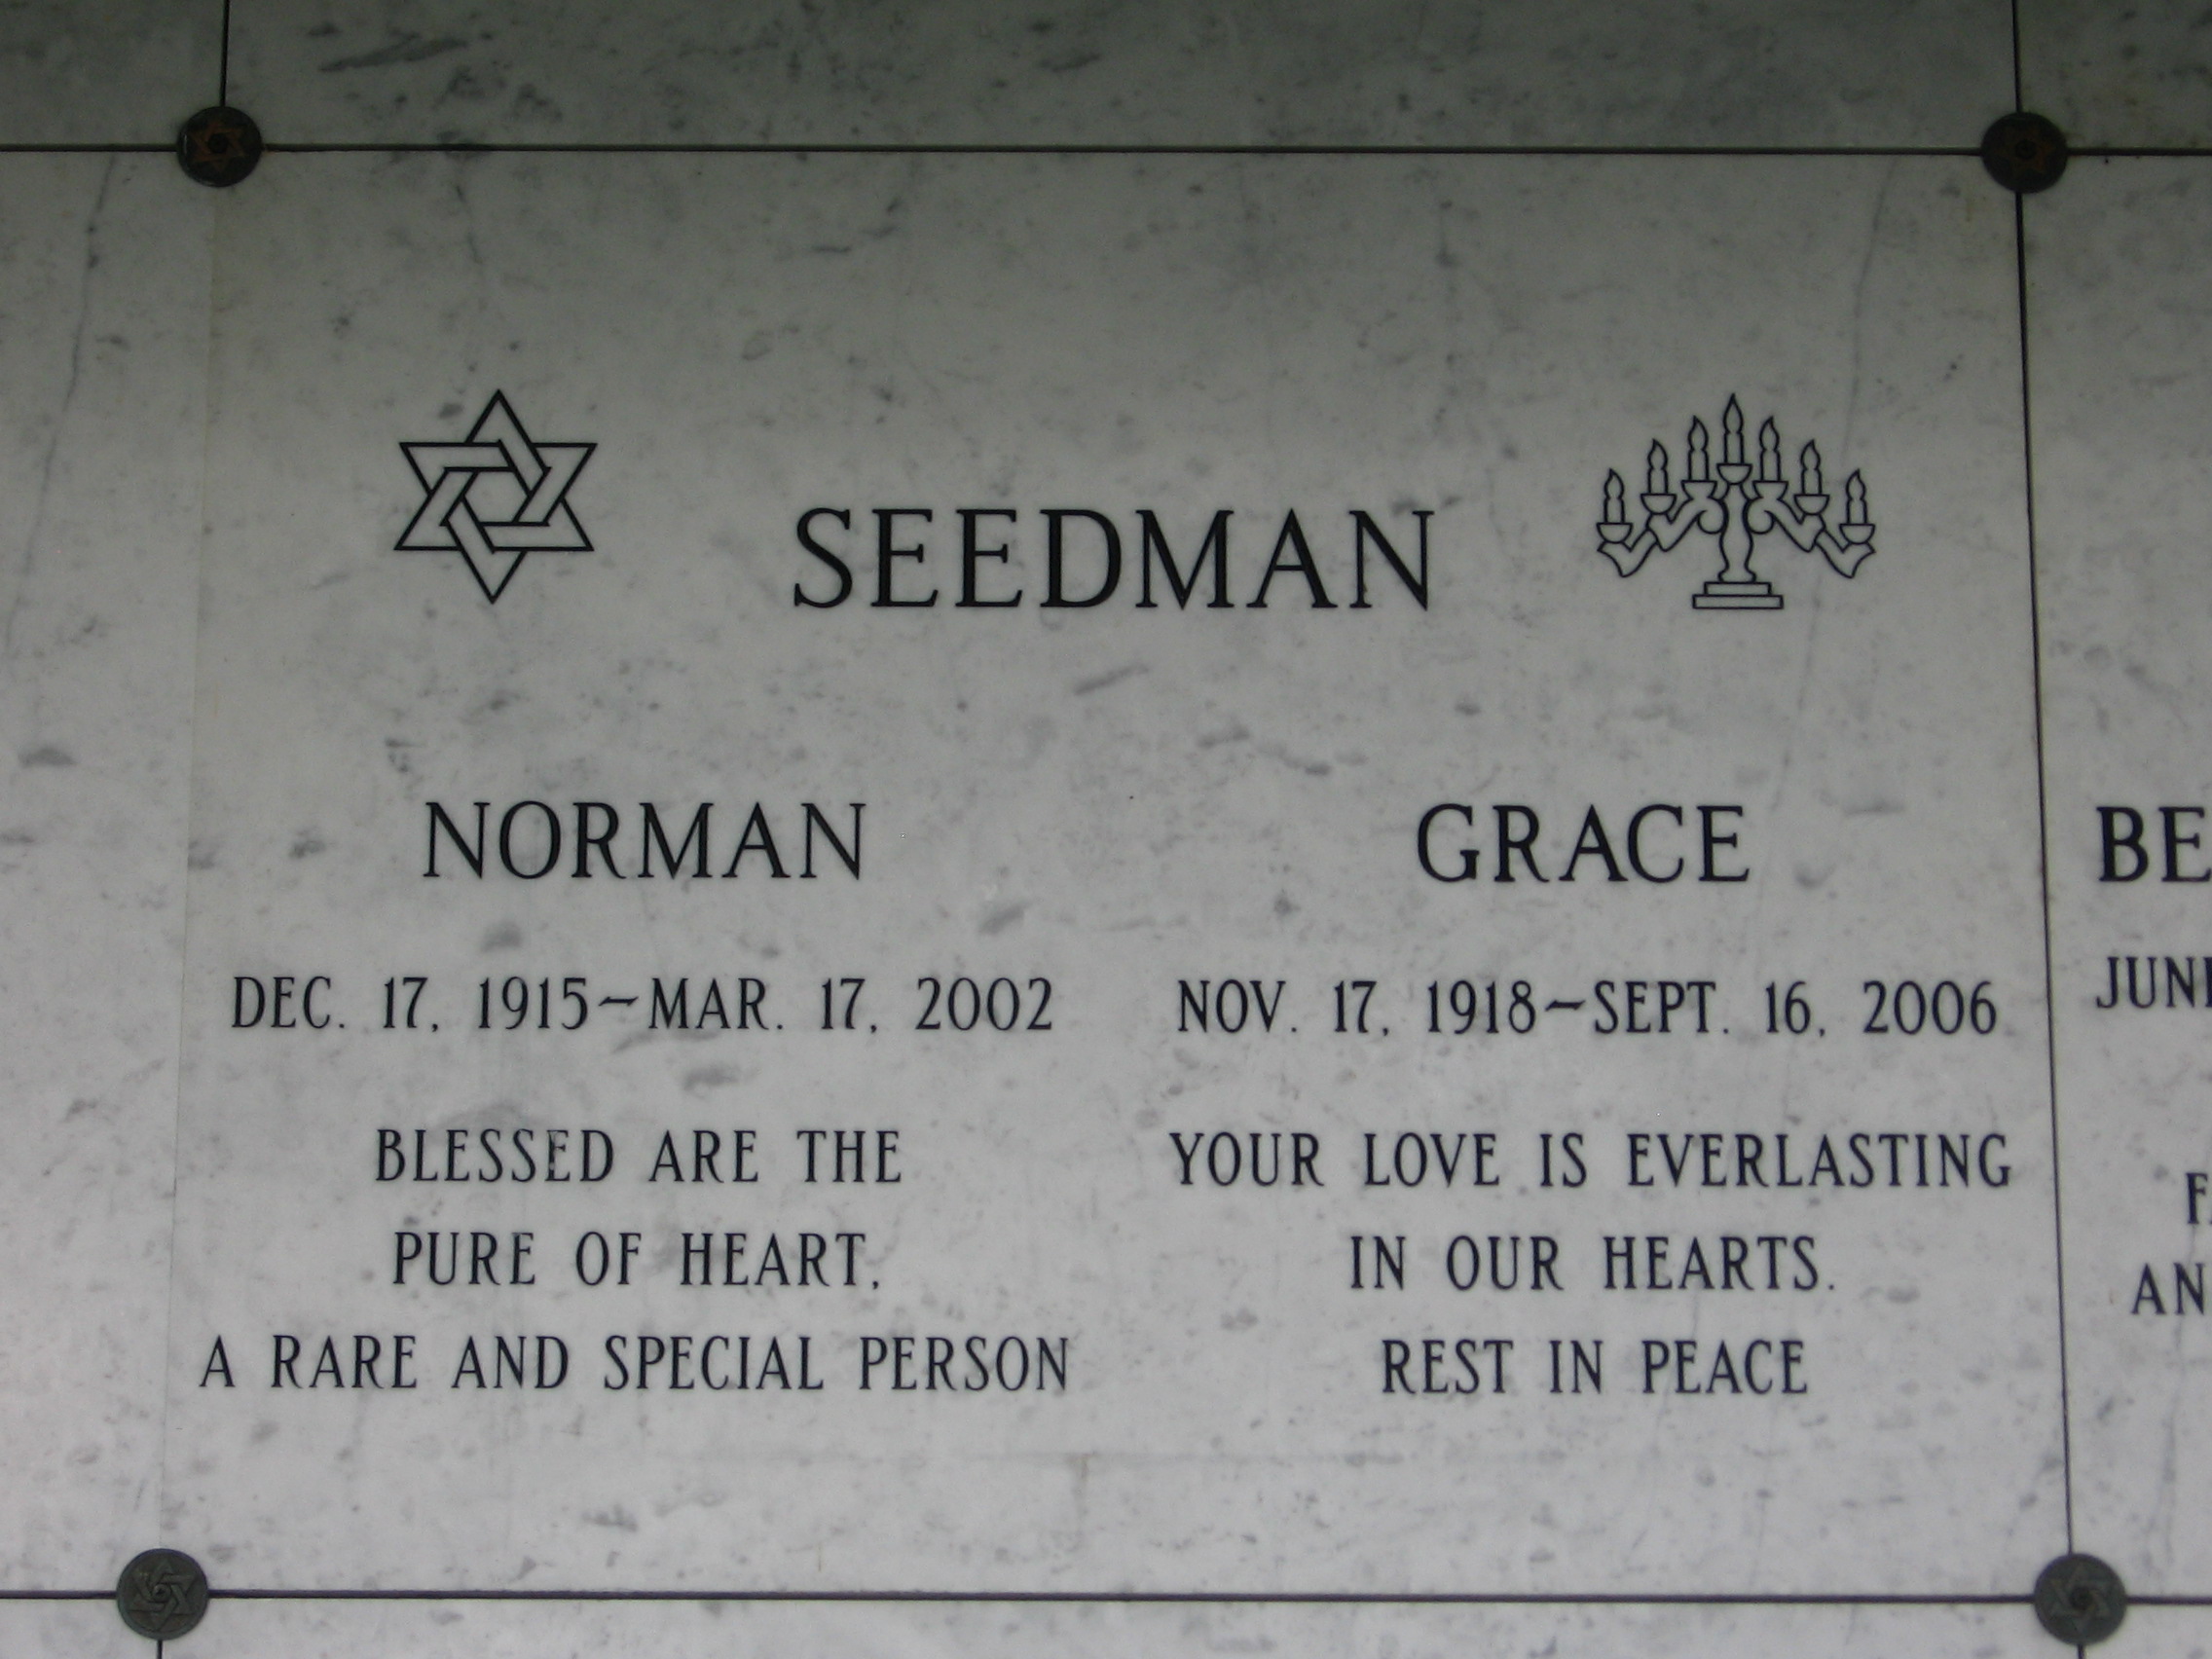 Norman Seedman